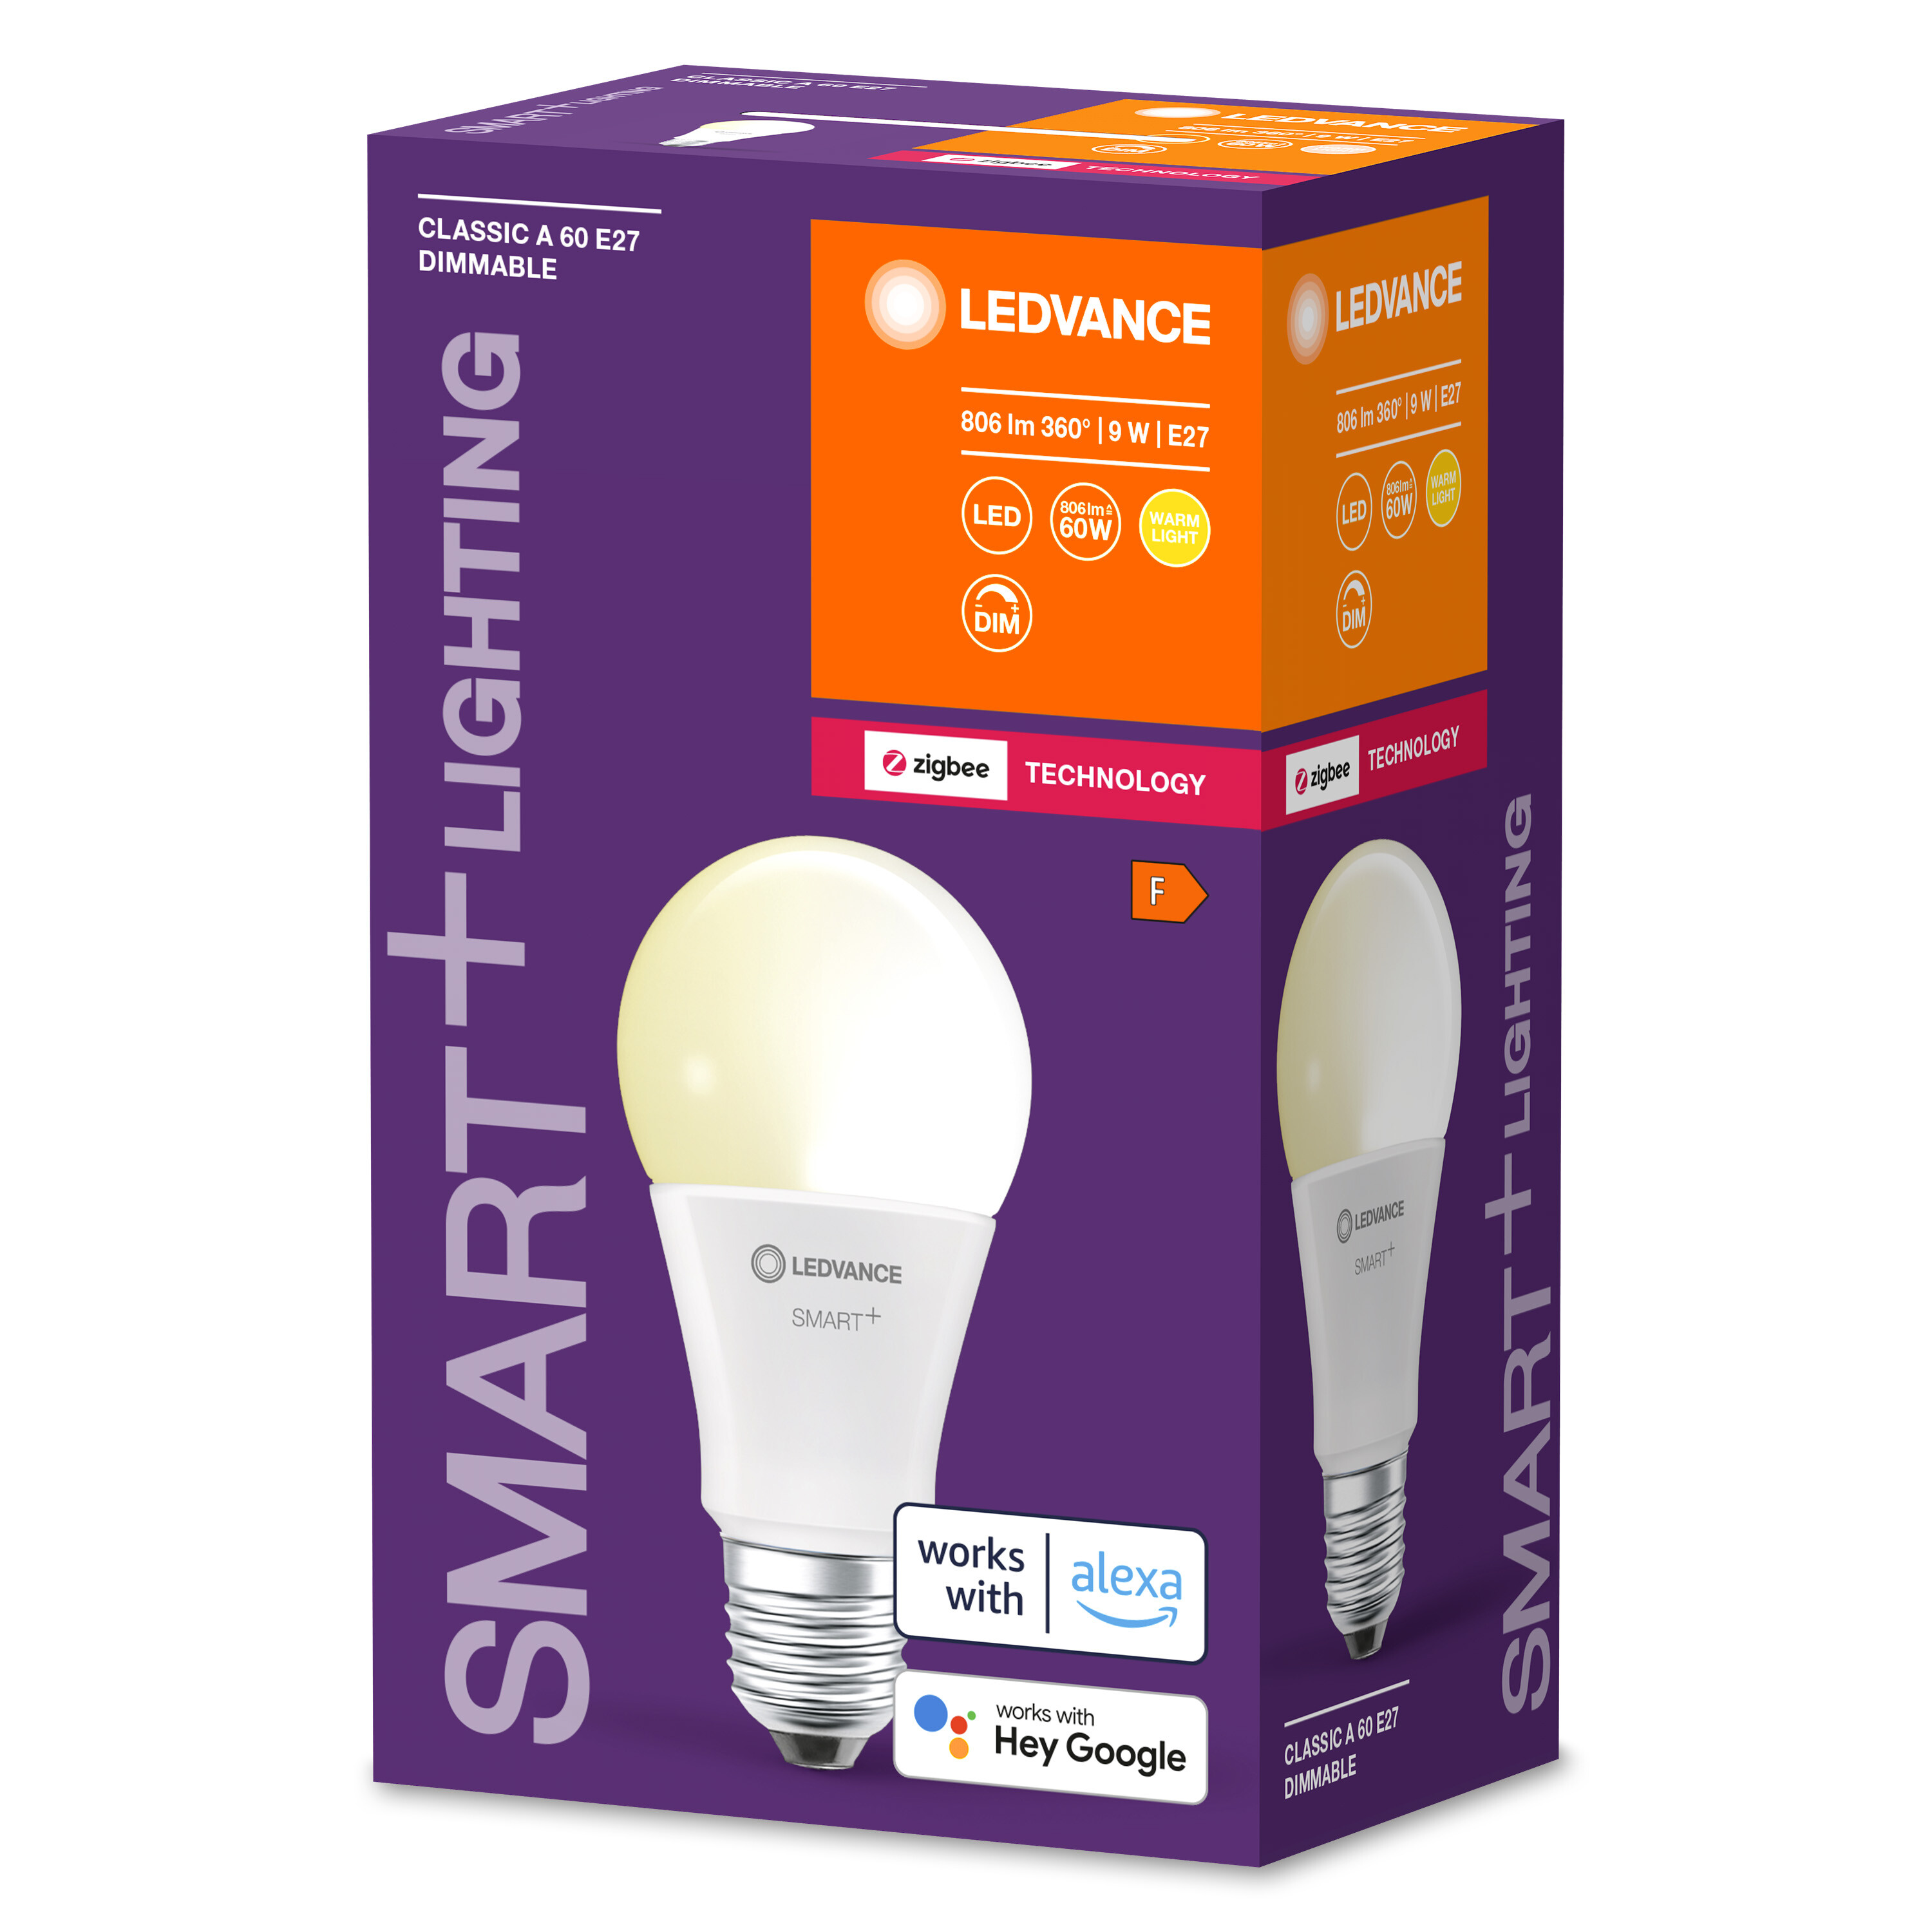 Dimmable Smarte LED Warmweiß Lampe LEDVANCE Classic SMART+